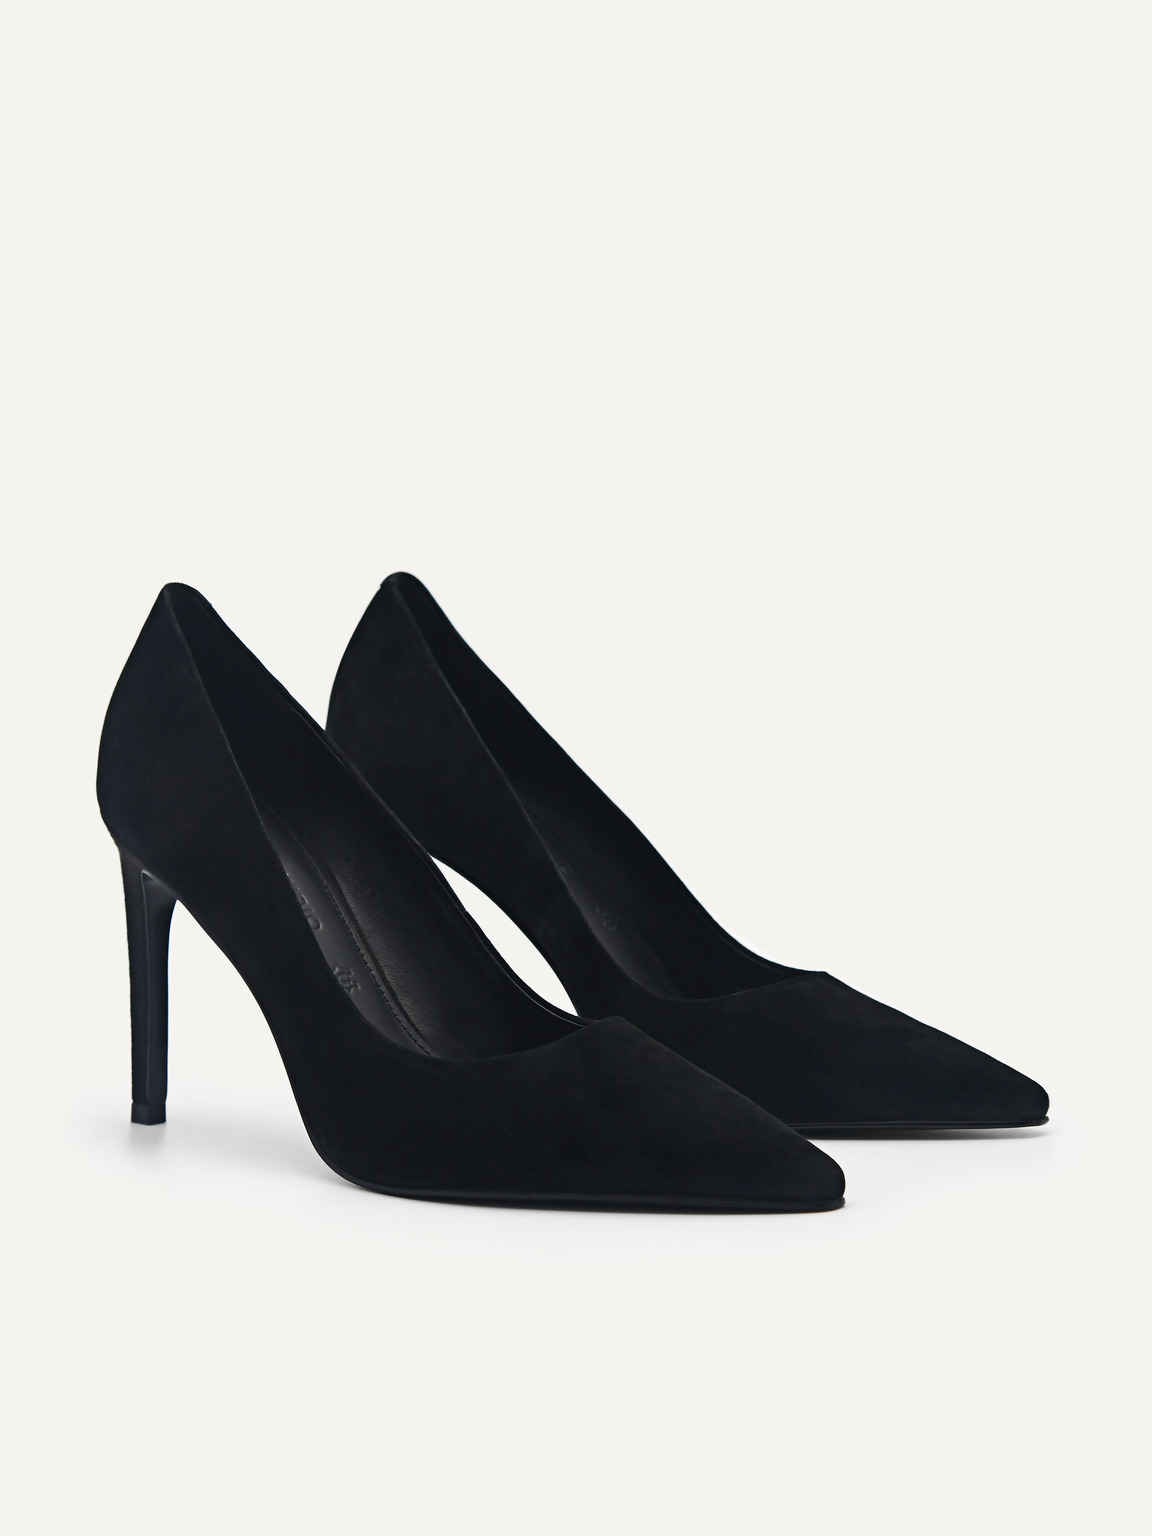 PEDRO工作室Ursula皮革高跟鞋, 黑色